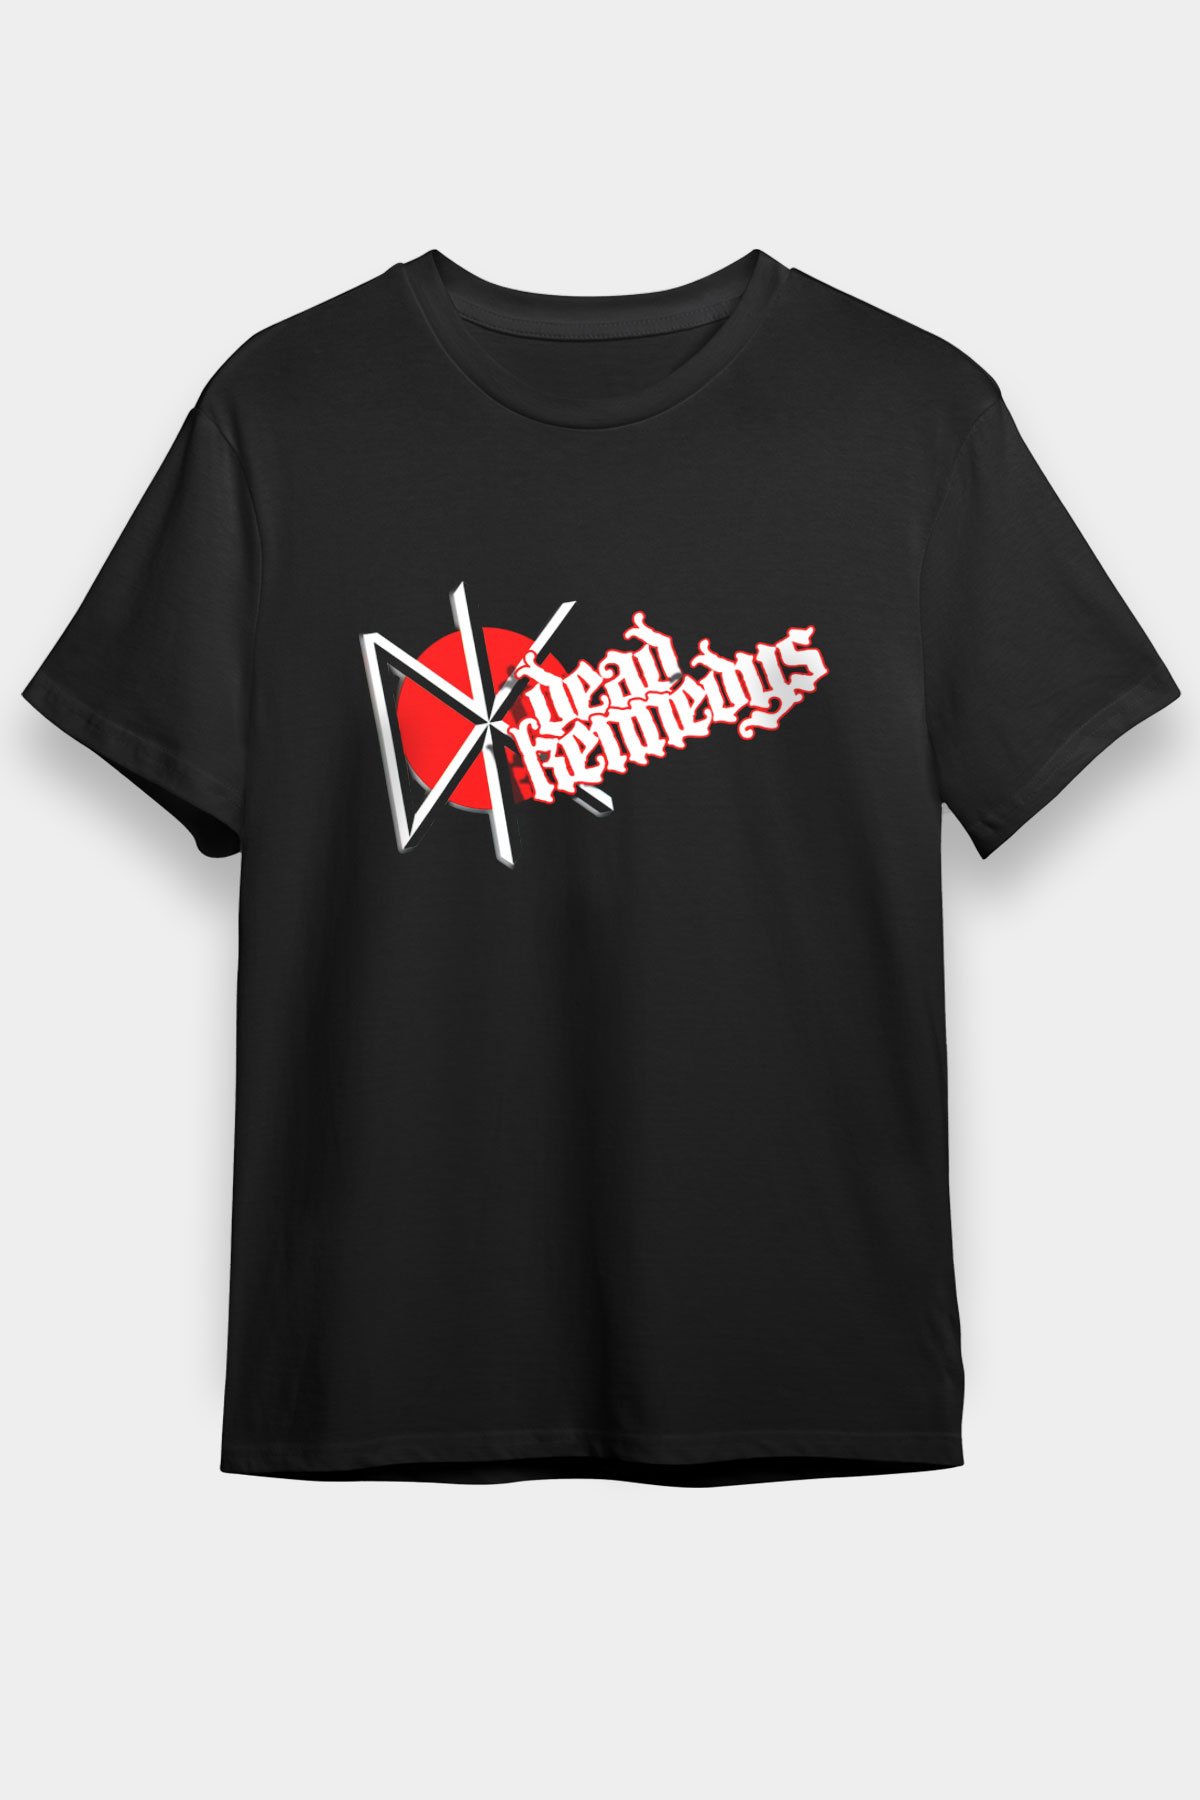 Dead Kennedys Black Unisex T-Shirt - Tees - Shirts